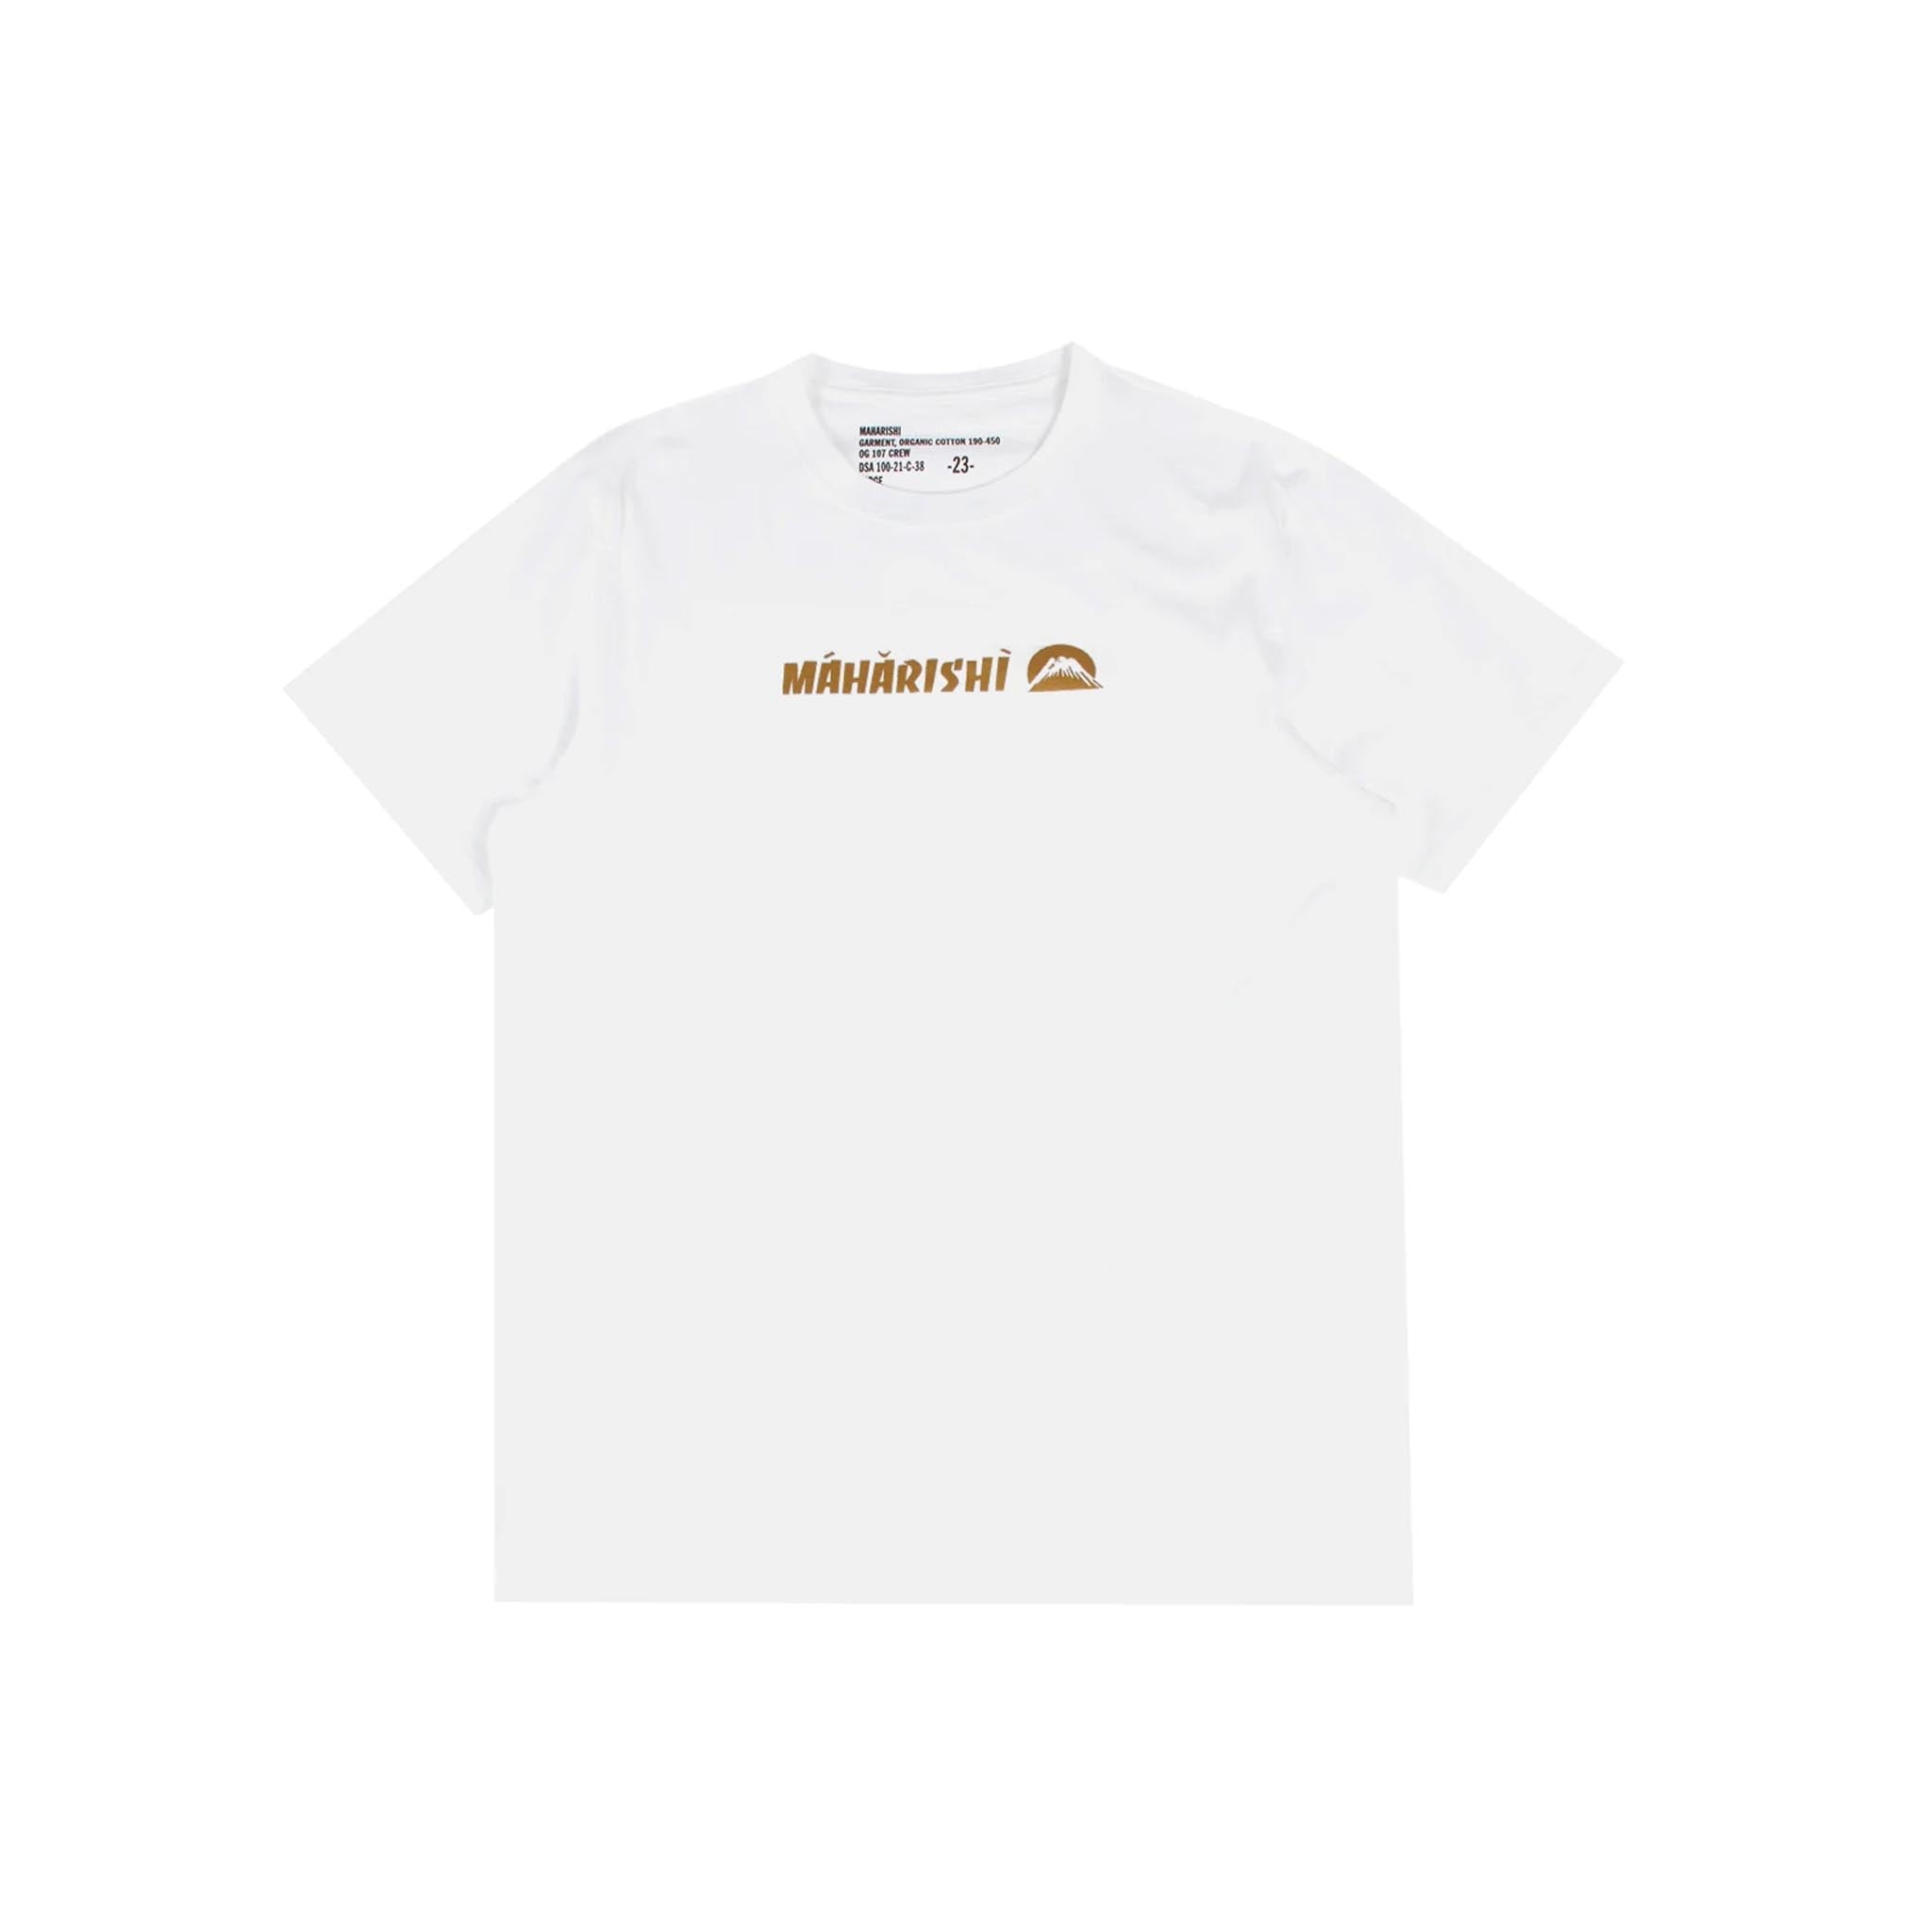 Maharishi Maha Gold Tailor T-Shirt White